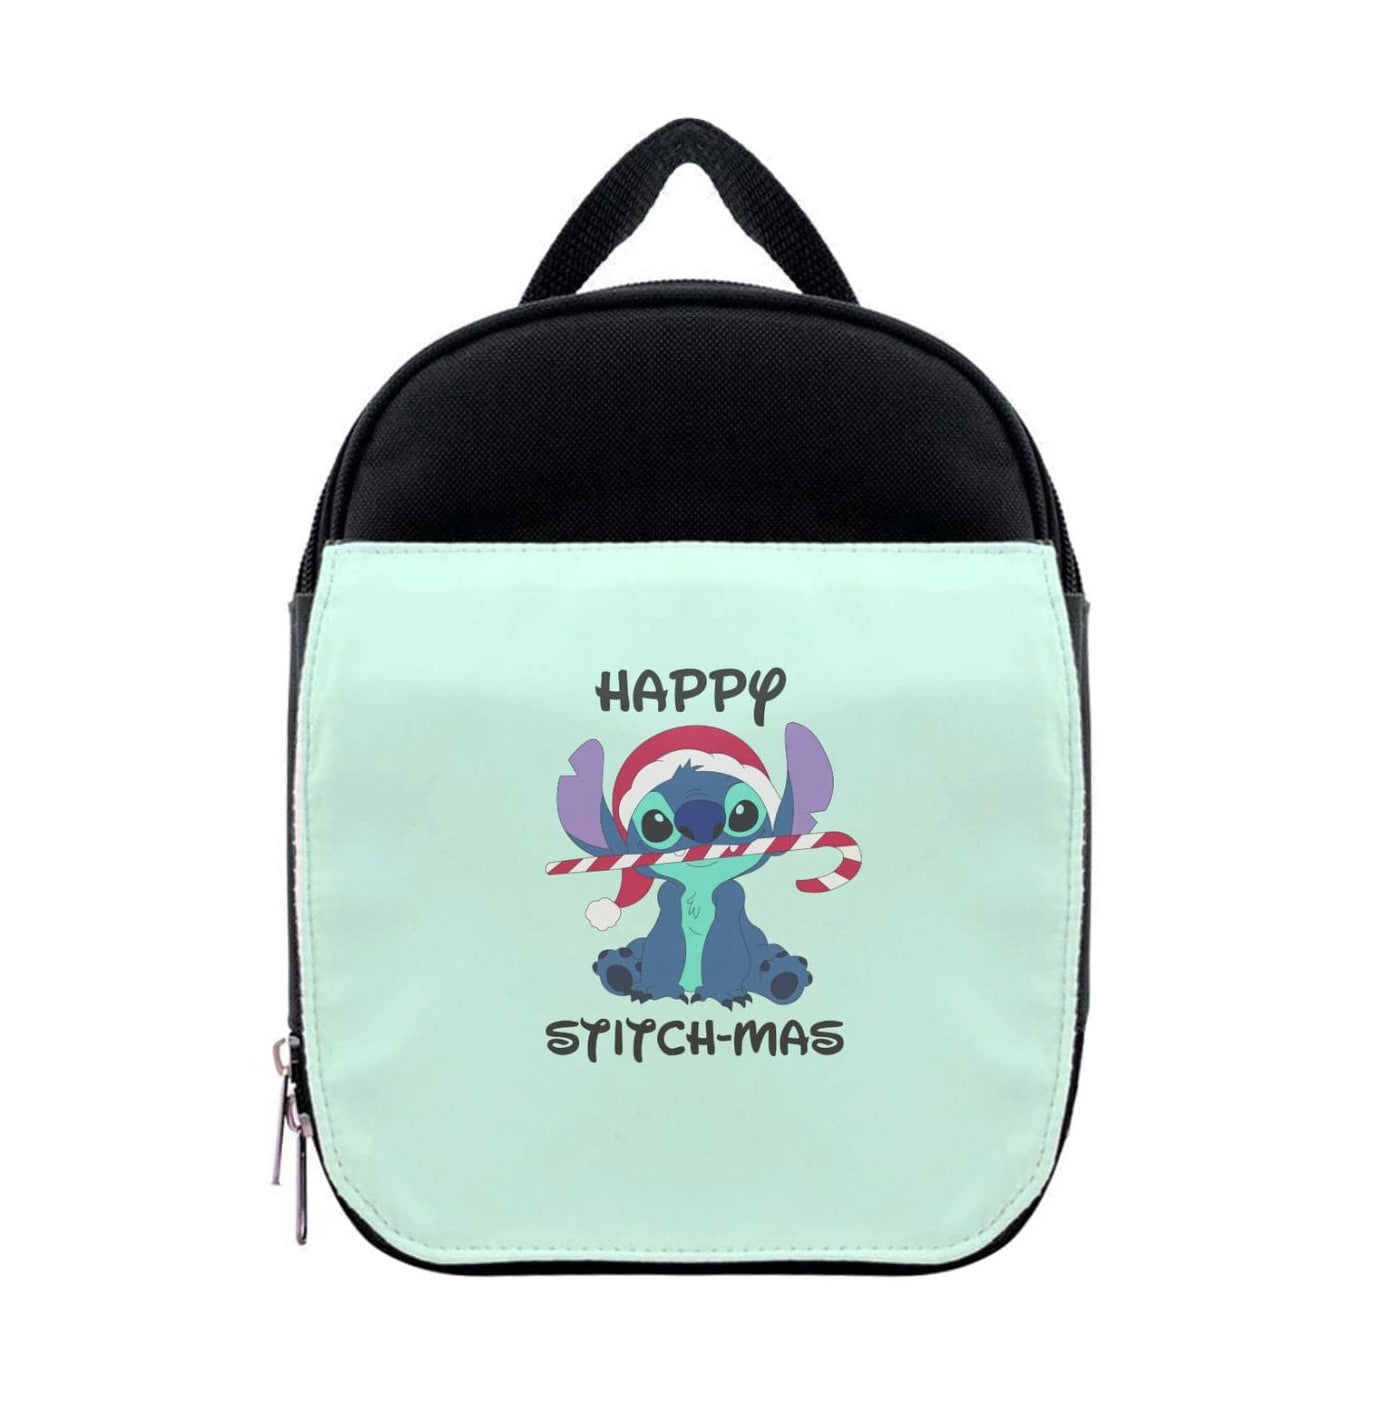 Happy Stitchmas - Christmas Lunchbox